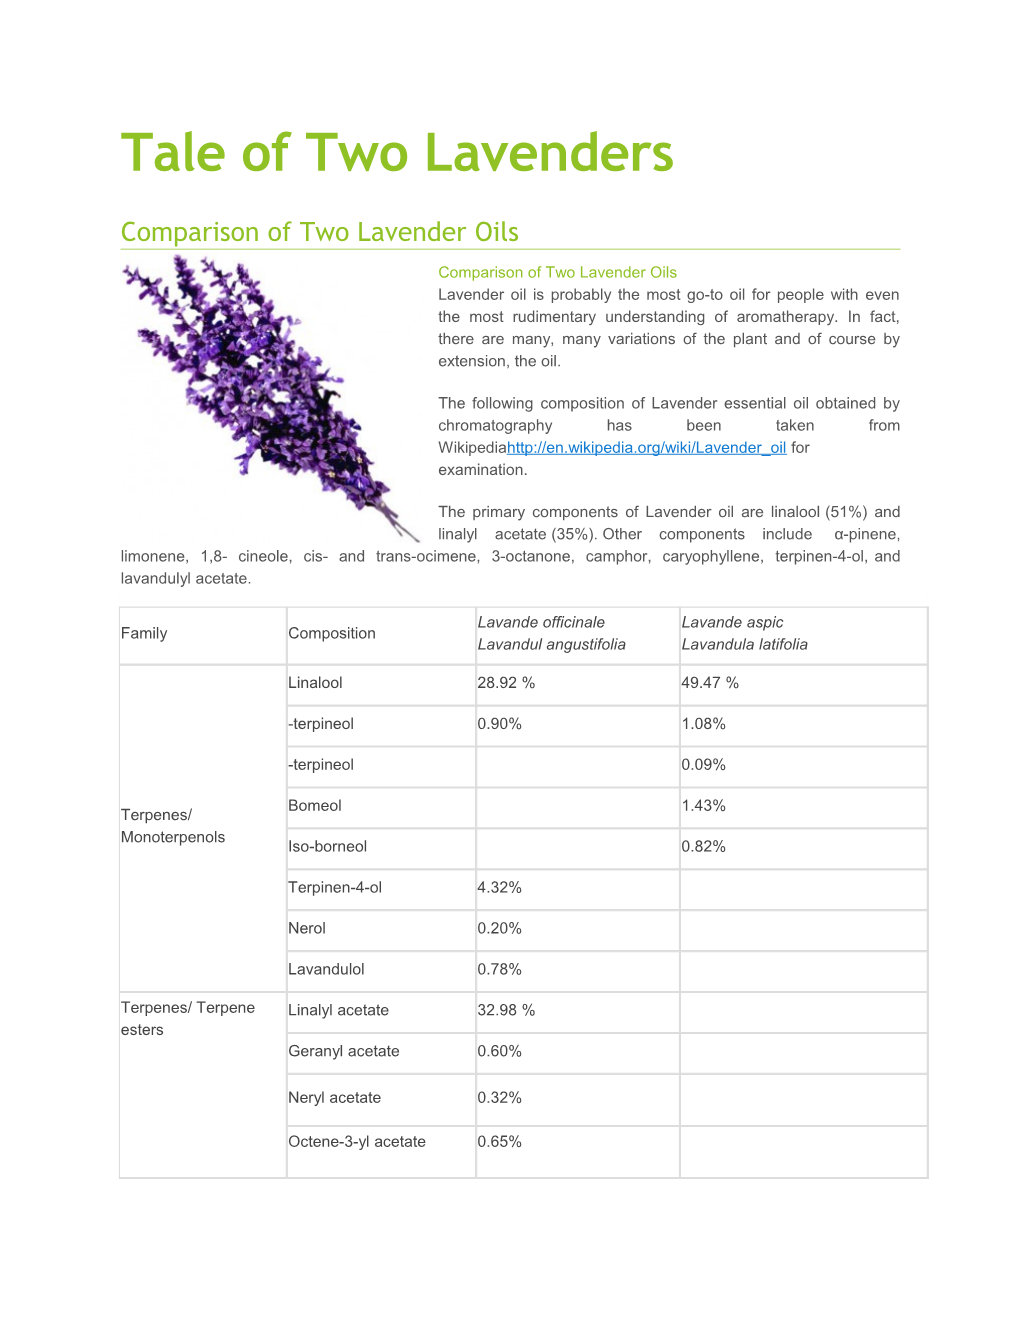 Comparison of Two Lavender Oils